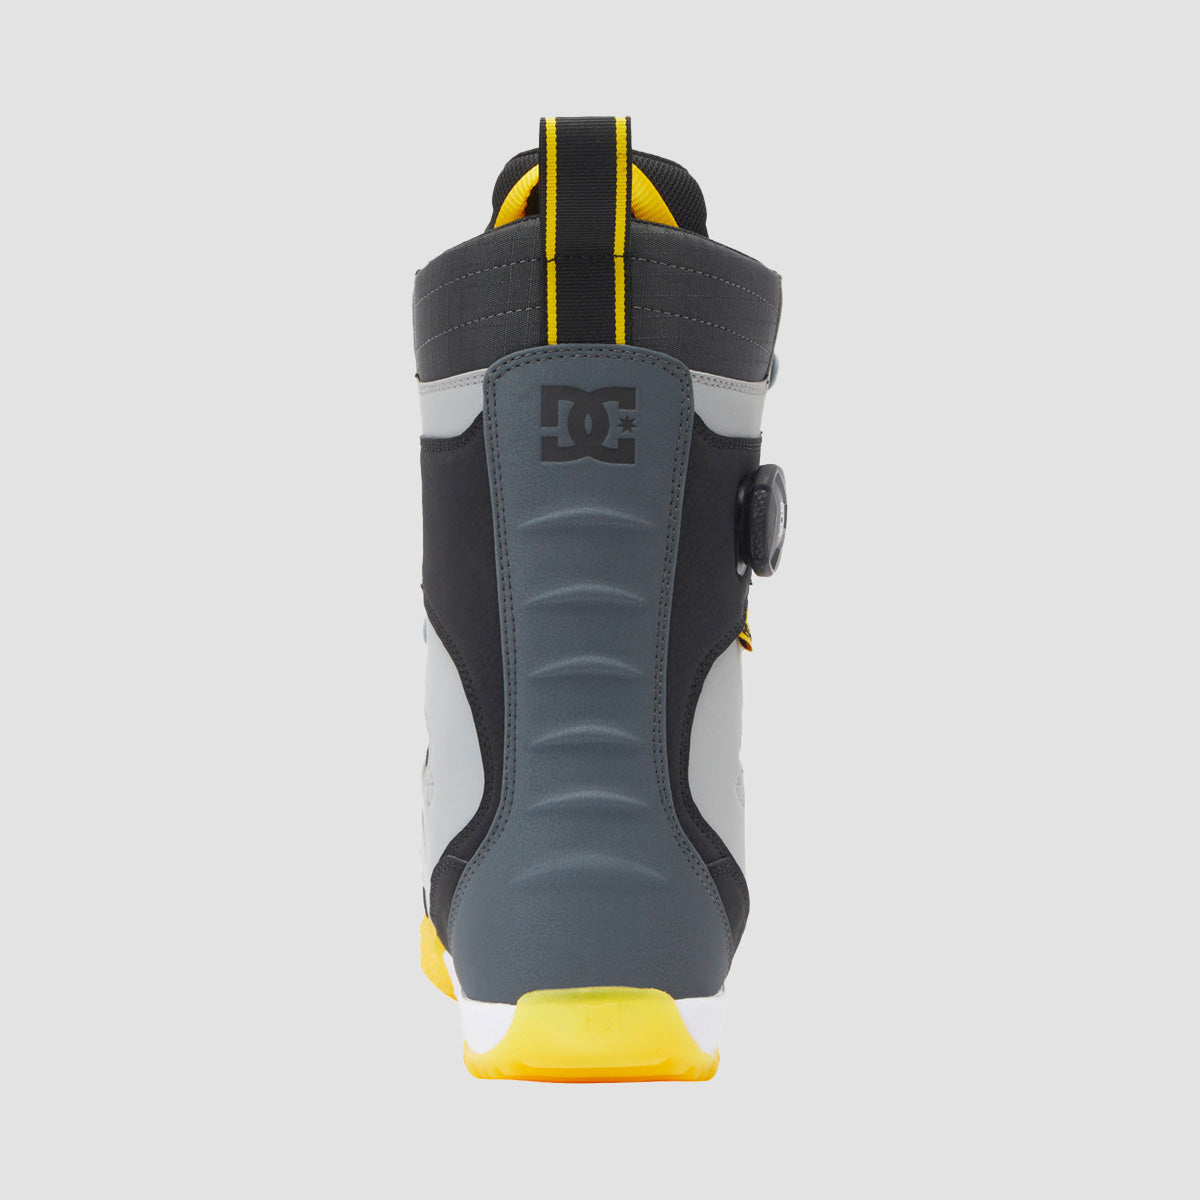 DC Premier Hybrid BOA Snowboard Boots Black/Grey/Yellow